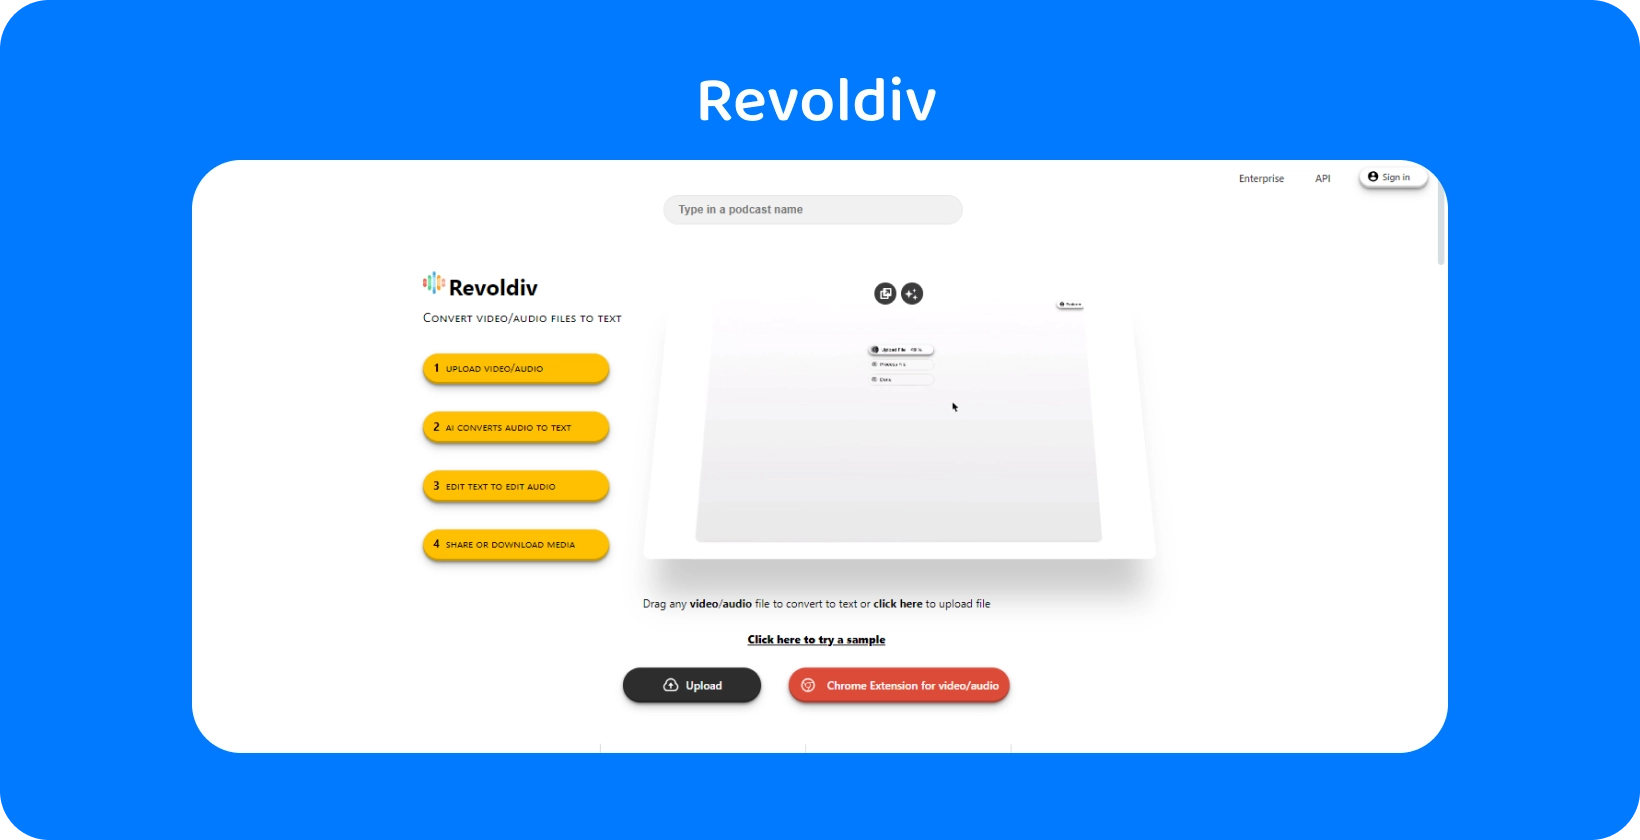 Revoldiv 时尚的 Web 界面可用于音频上传和转换为文本，展示了简单性和效率。